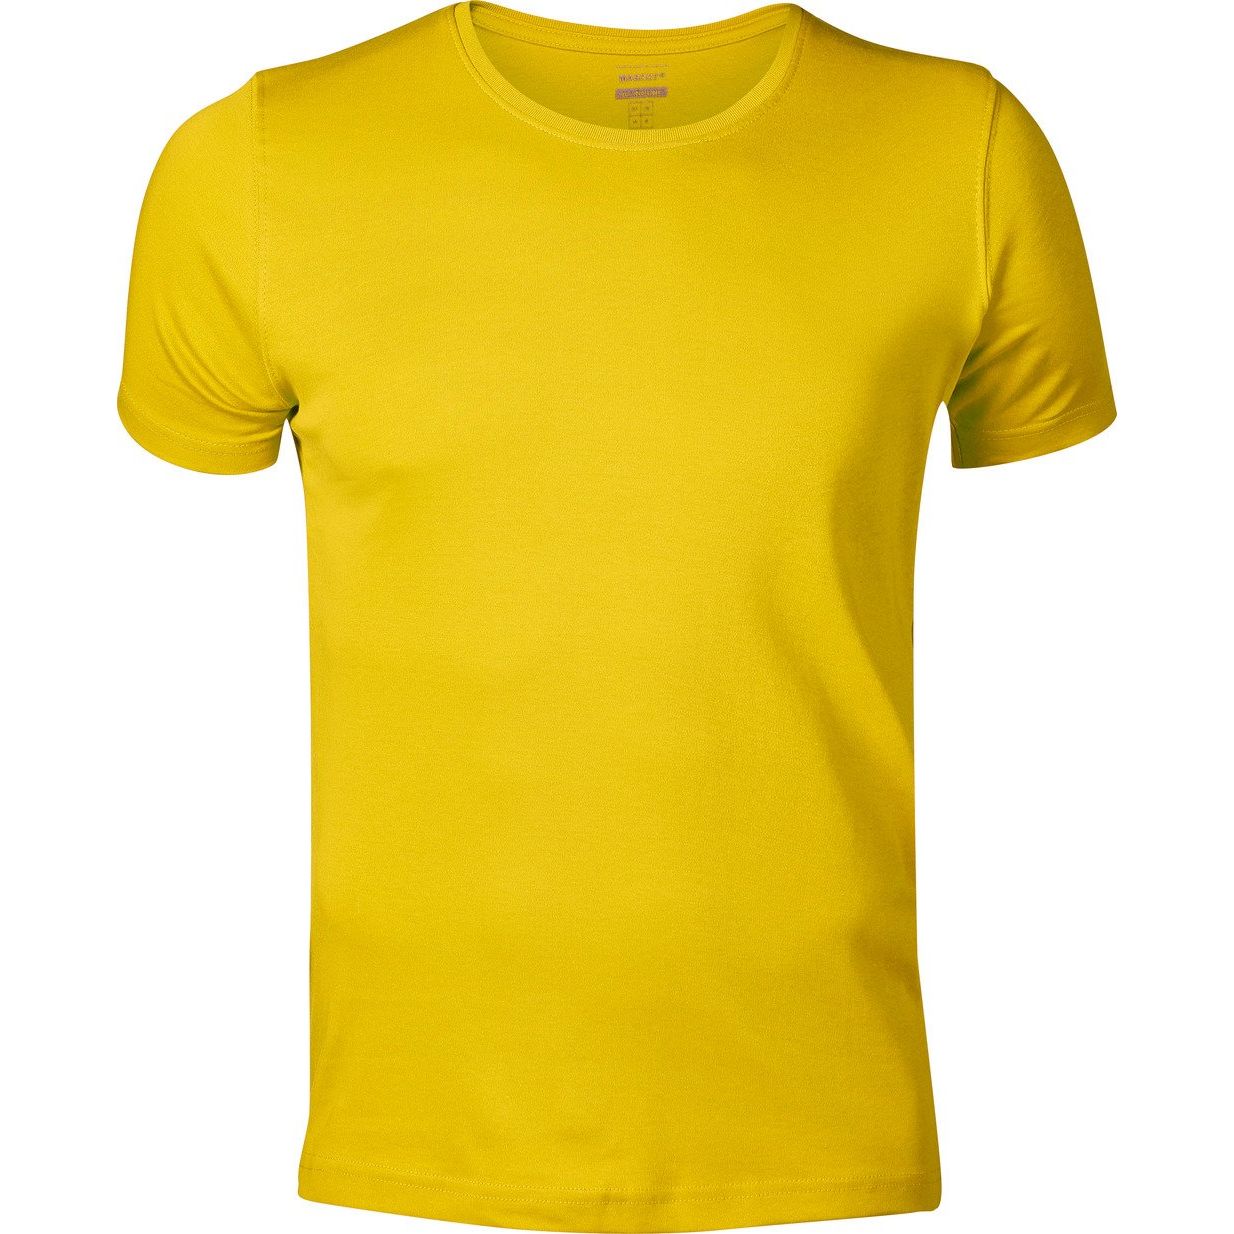 Mascot Vence T-shirt Slim-Fit Sunflower Yellow 51585-967-77 Front